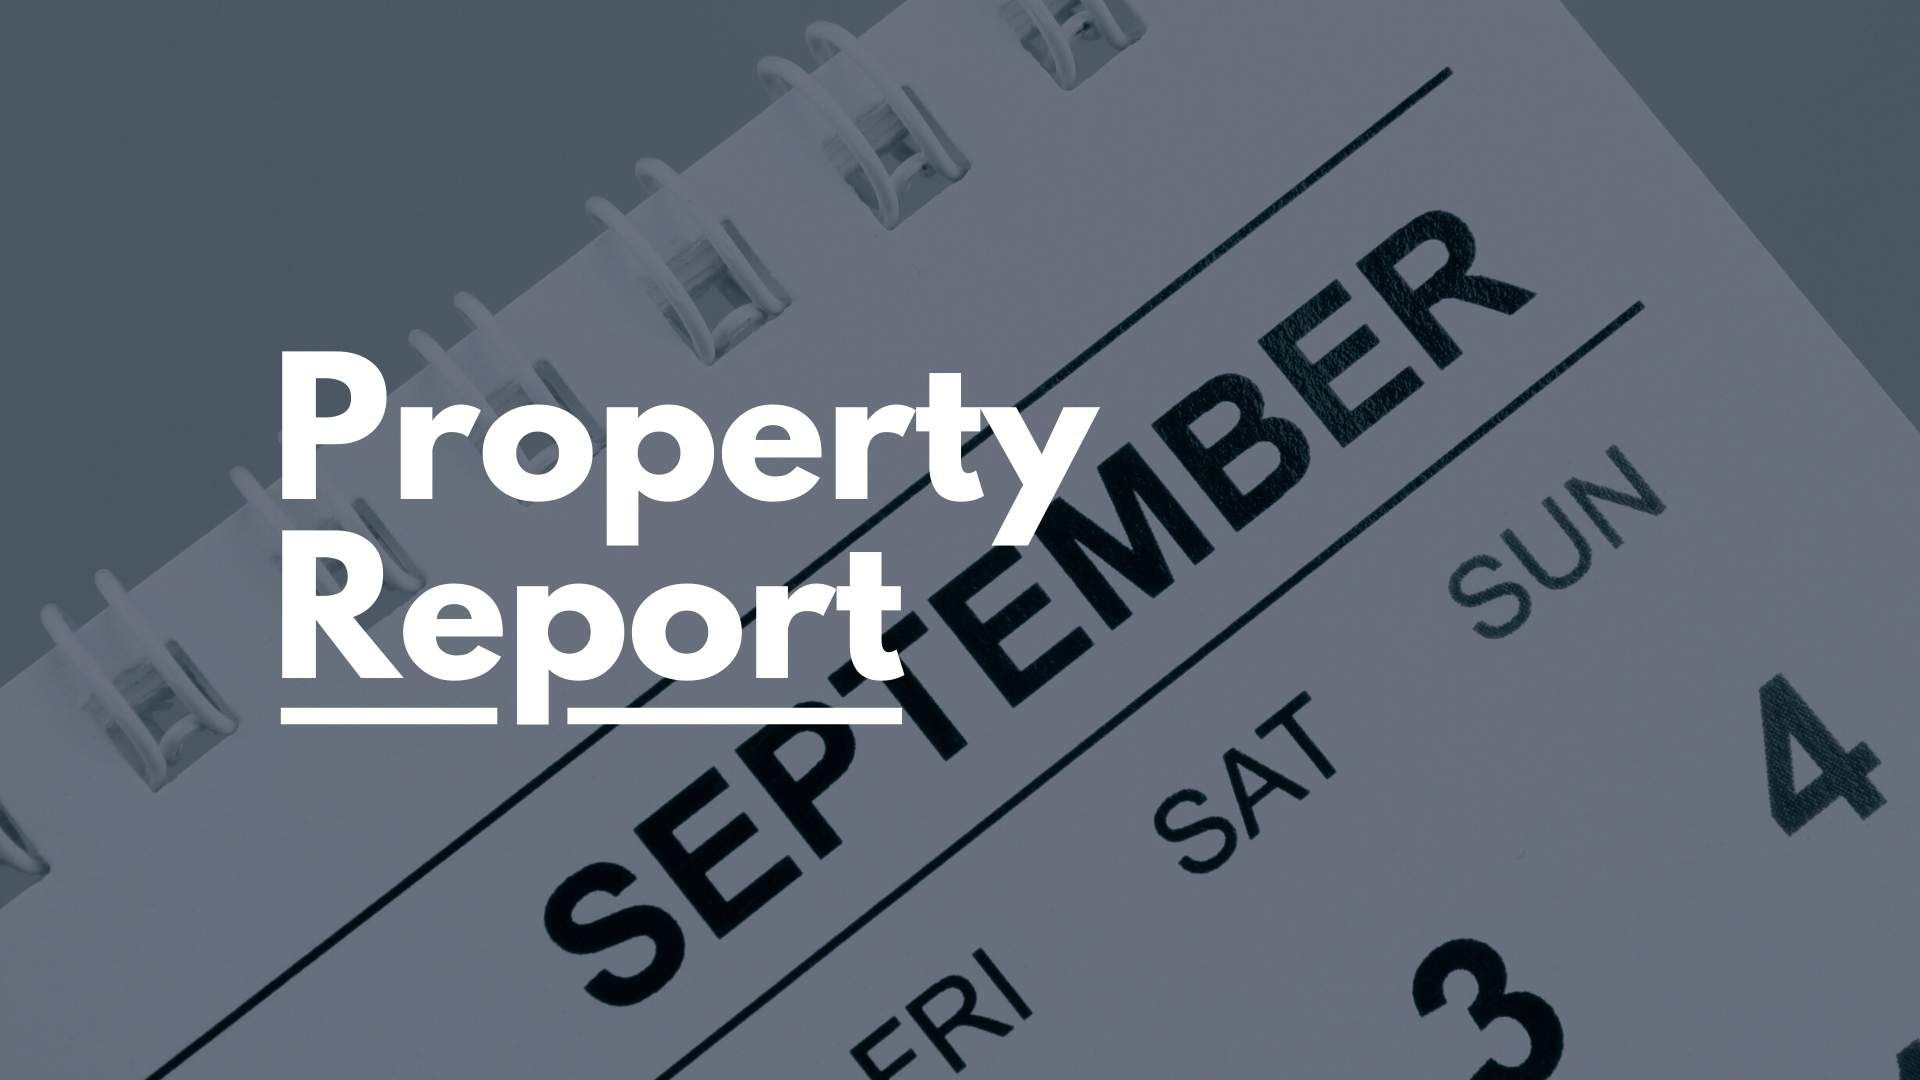 Latest: September’s property market report